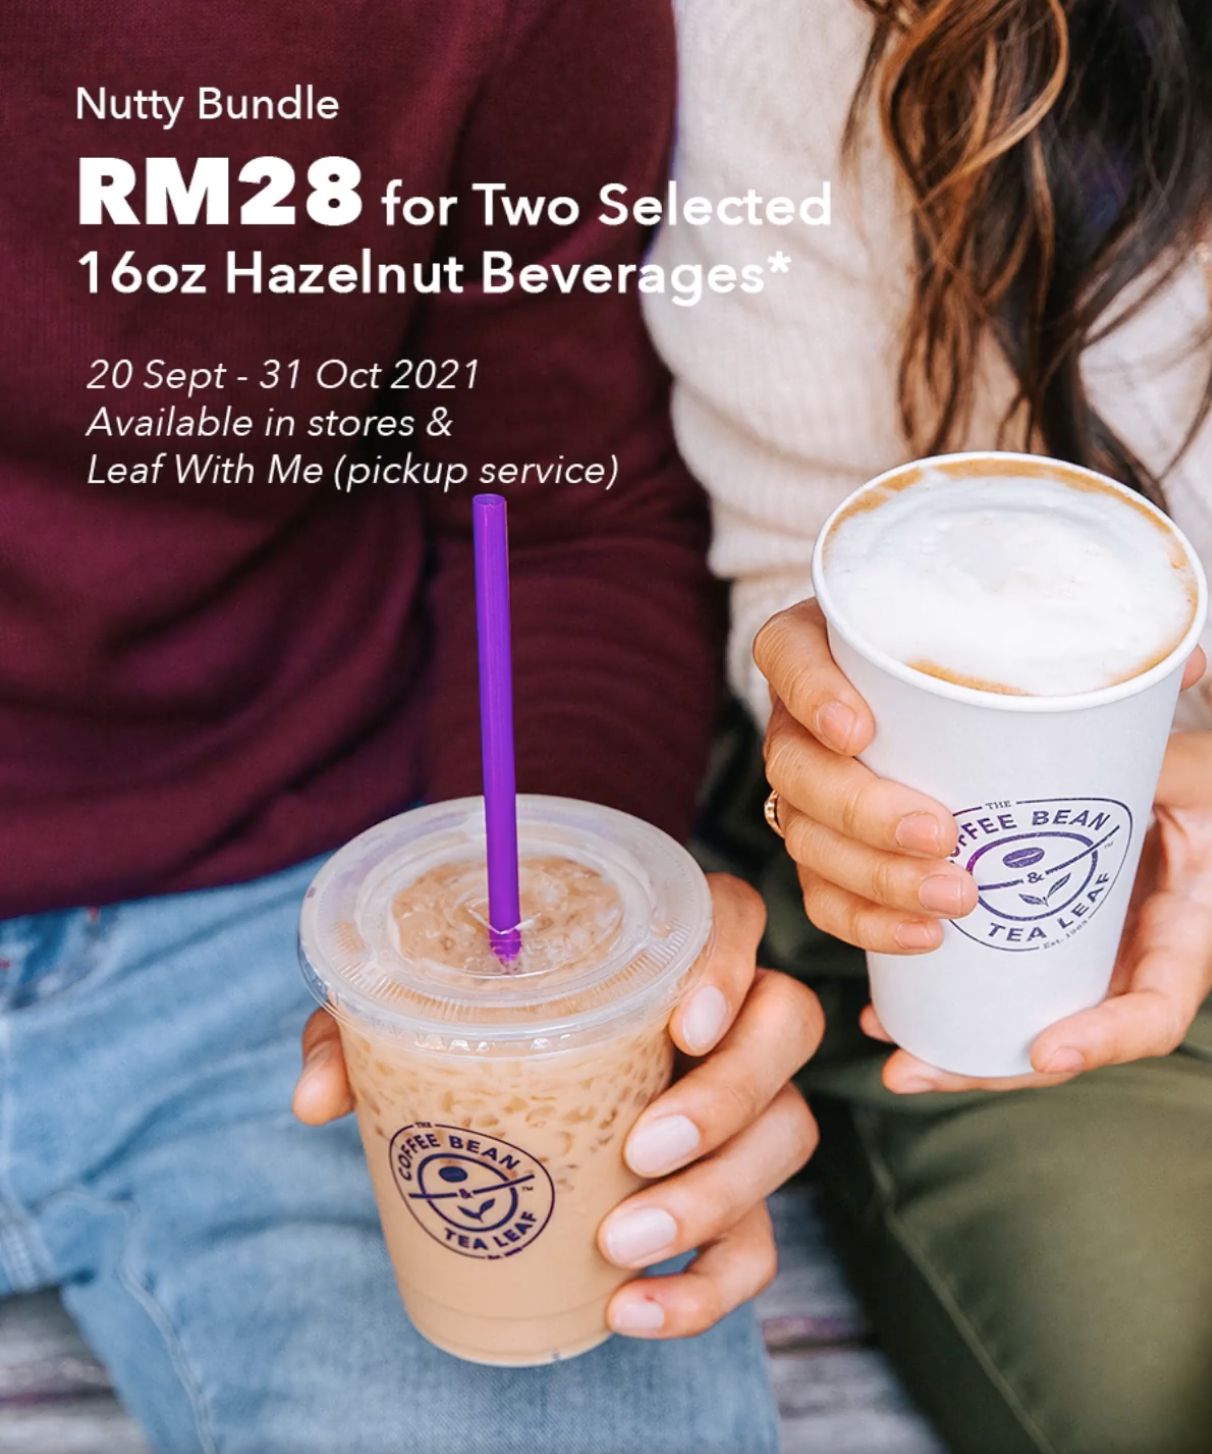 Coffee Bean Nutty Bundle Promotion 2 Hazelnut Beverages @ RM28 (20 September 2021 – 31 October 2021)